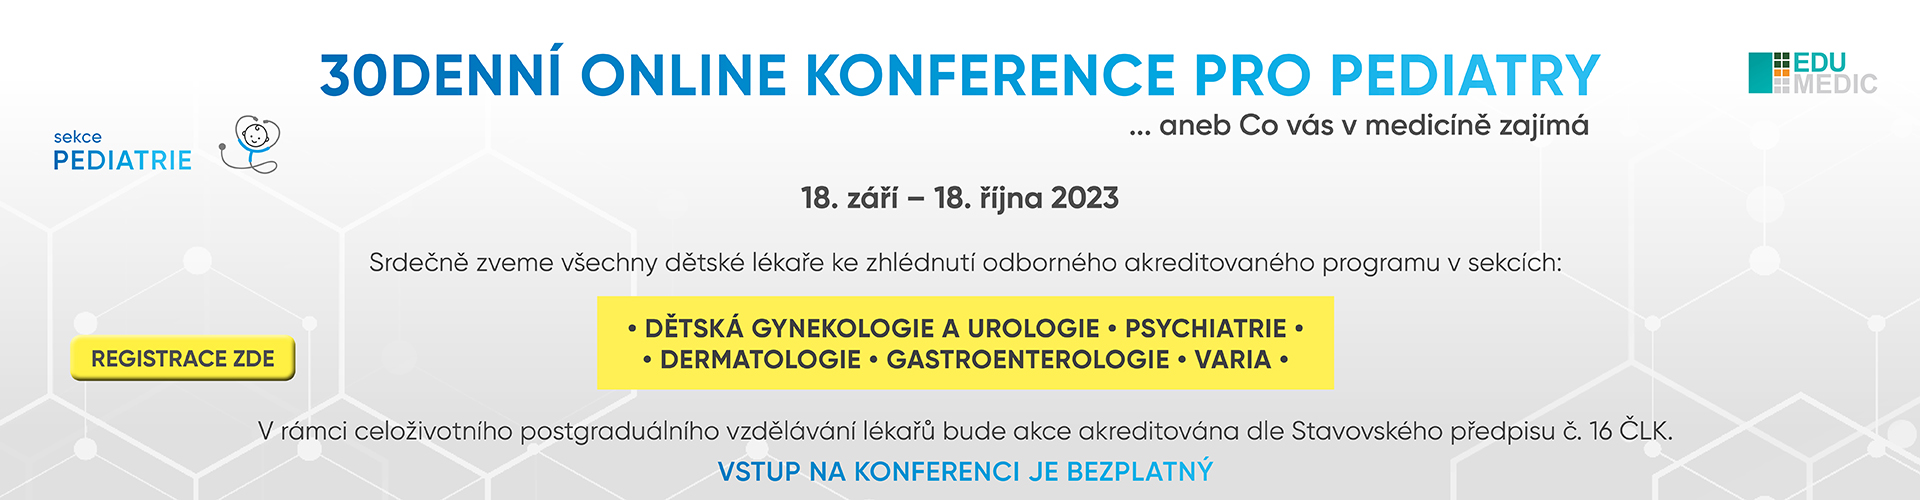 EDM022023 Banner 30denní online konference pro pediatry WEB (1)